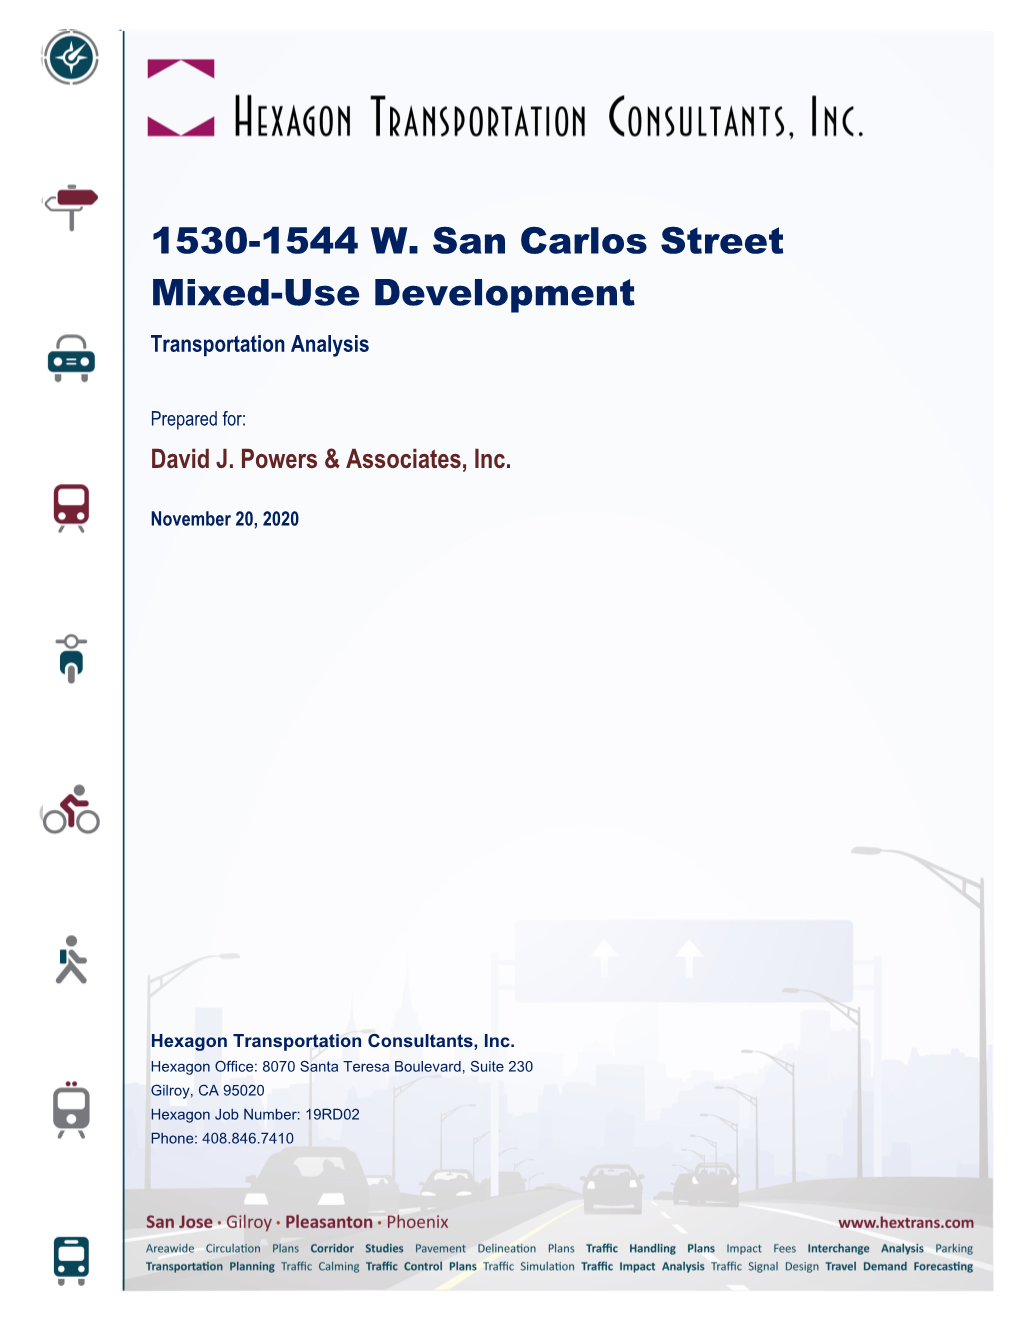 1530-1544 W. San Carlos Street Mixed-Use Development Transportation Analysis